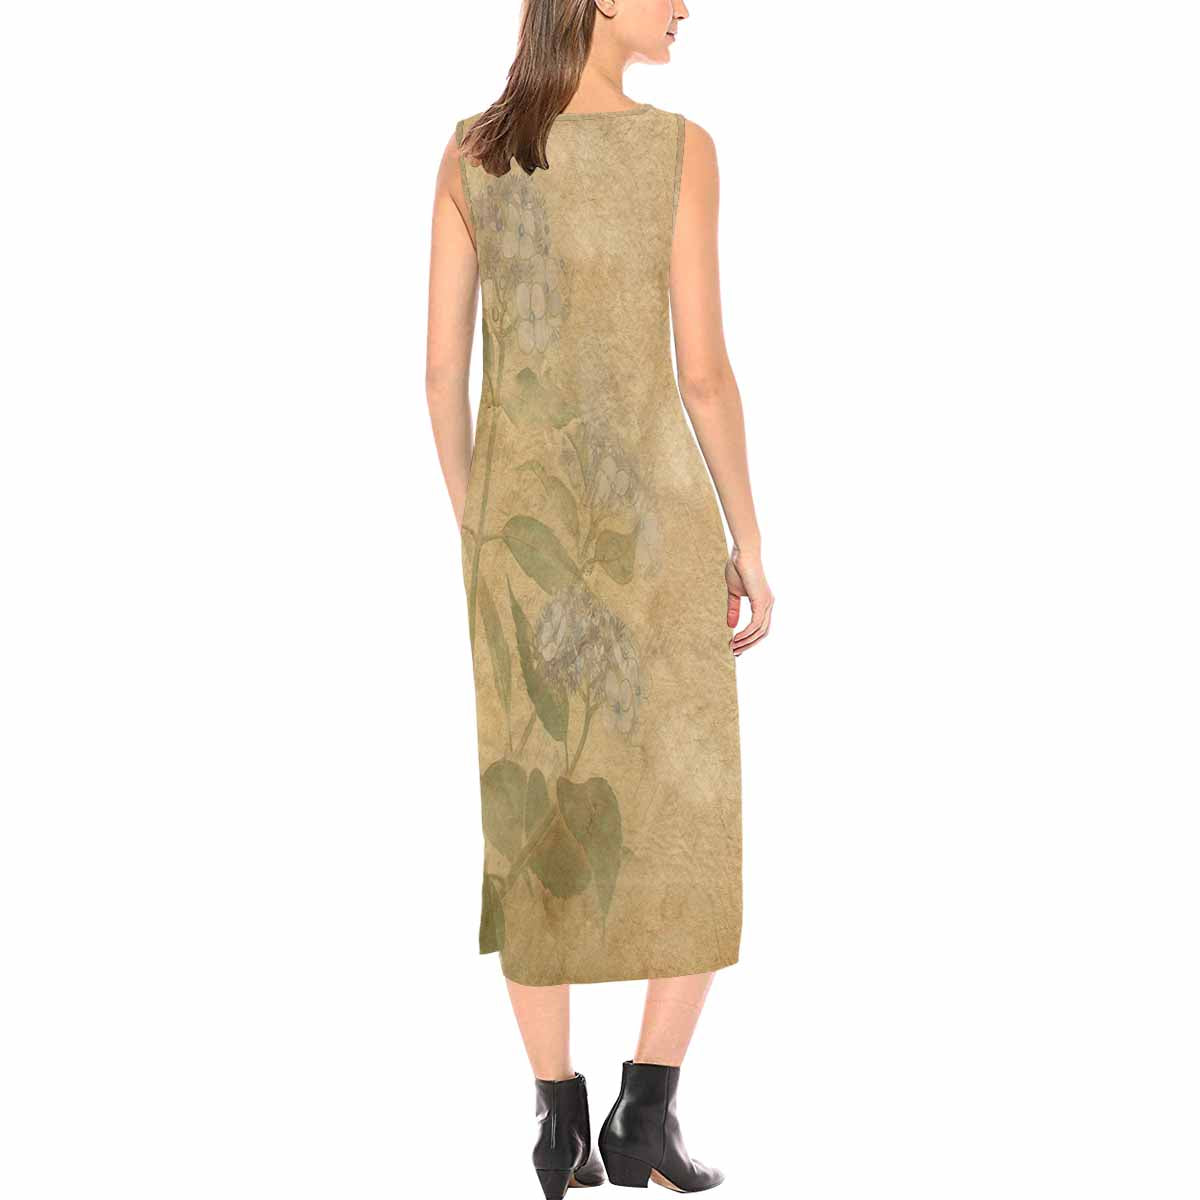 Antique General long chic dress, MODEL 09538, design 28